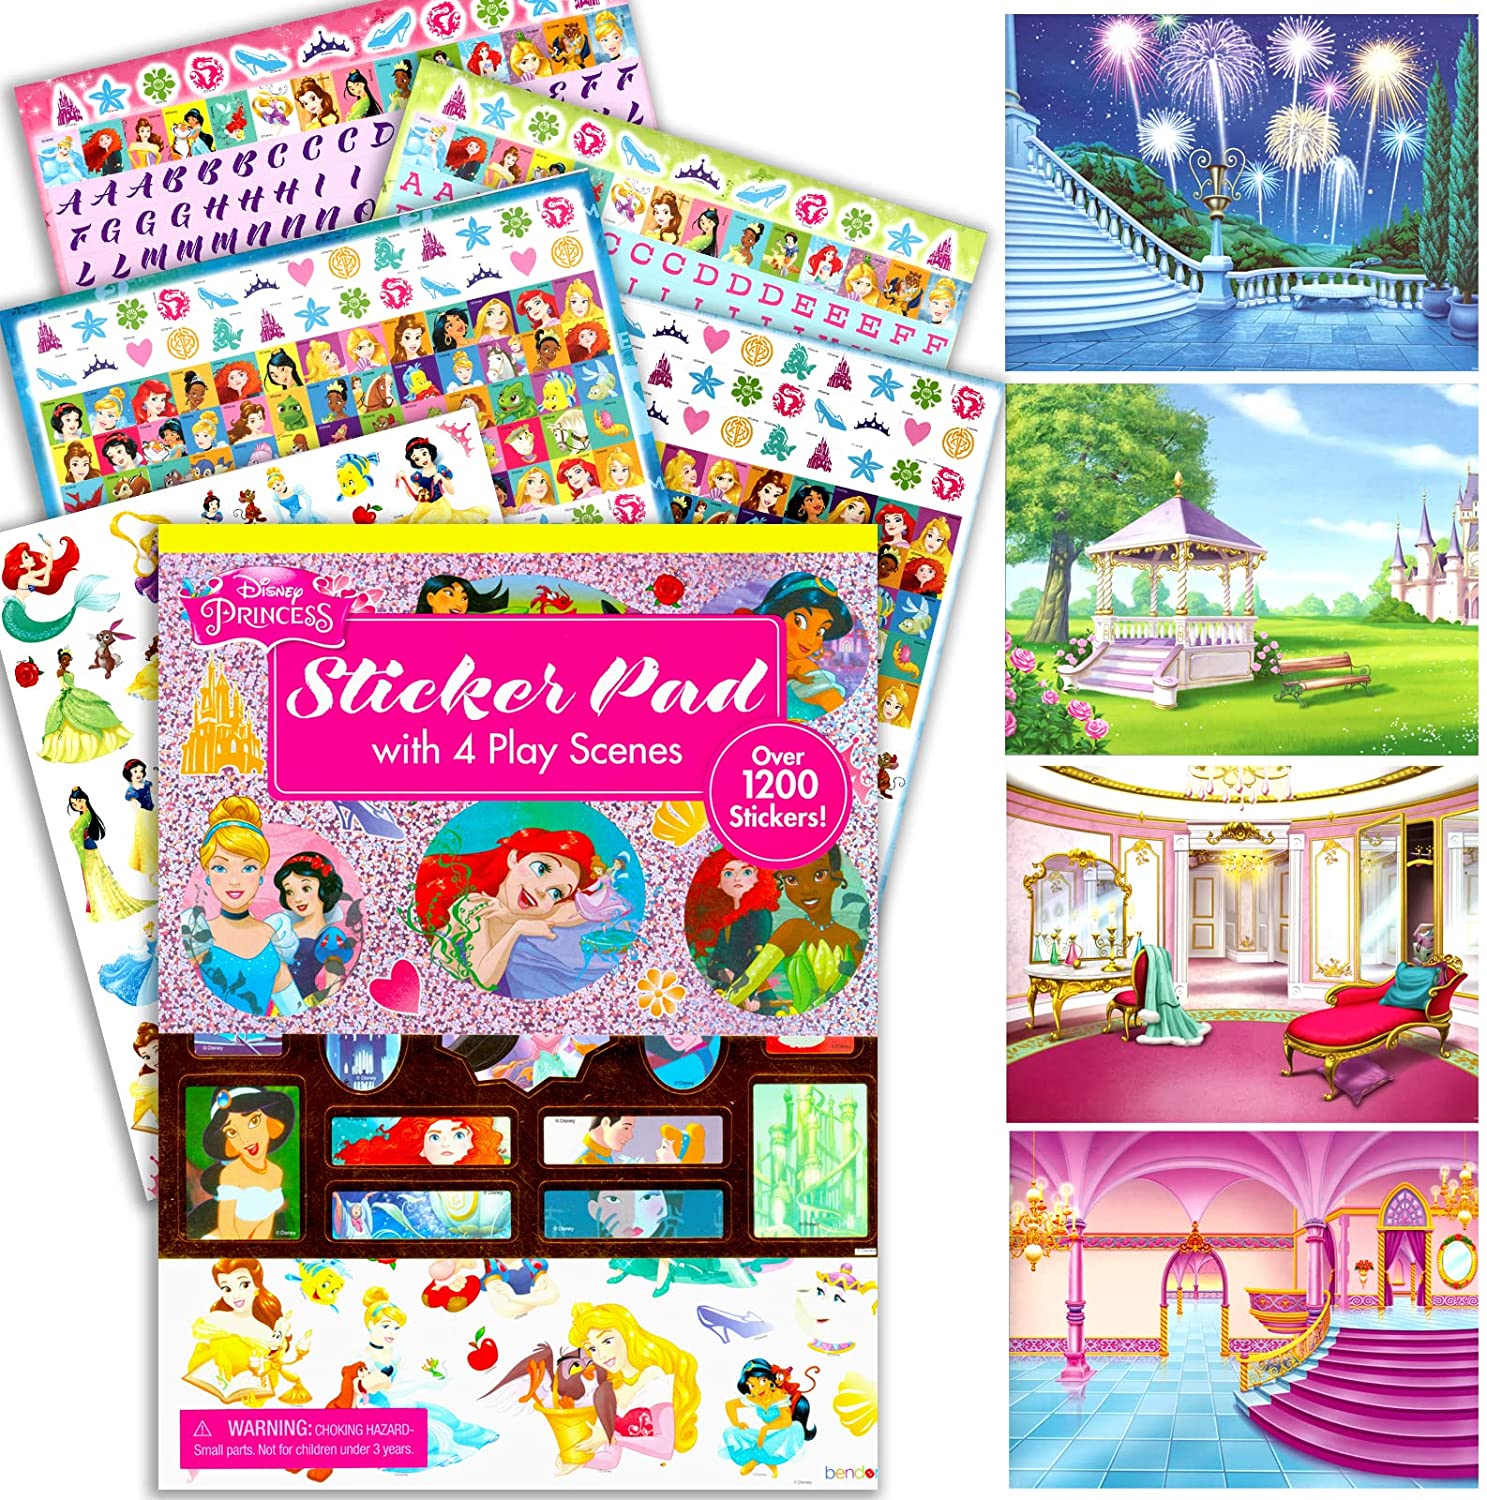 Disney Princess Coloring Book Set for Kids princess